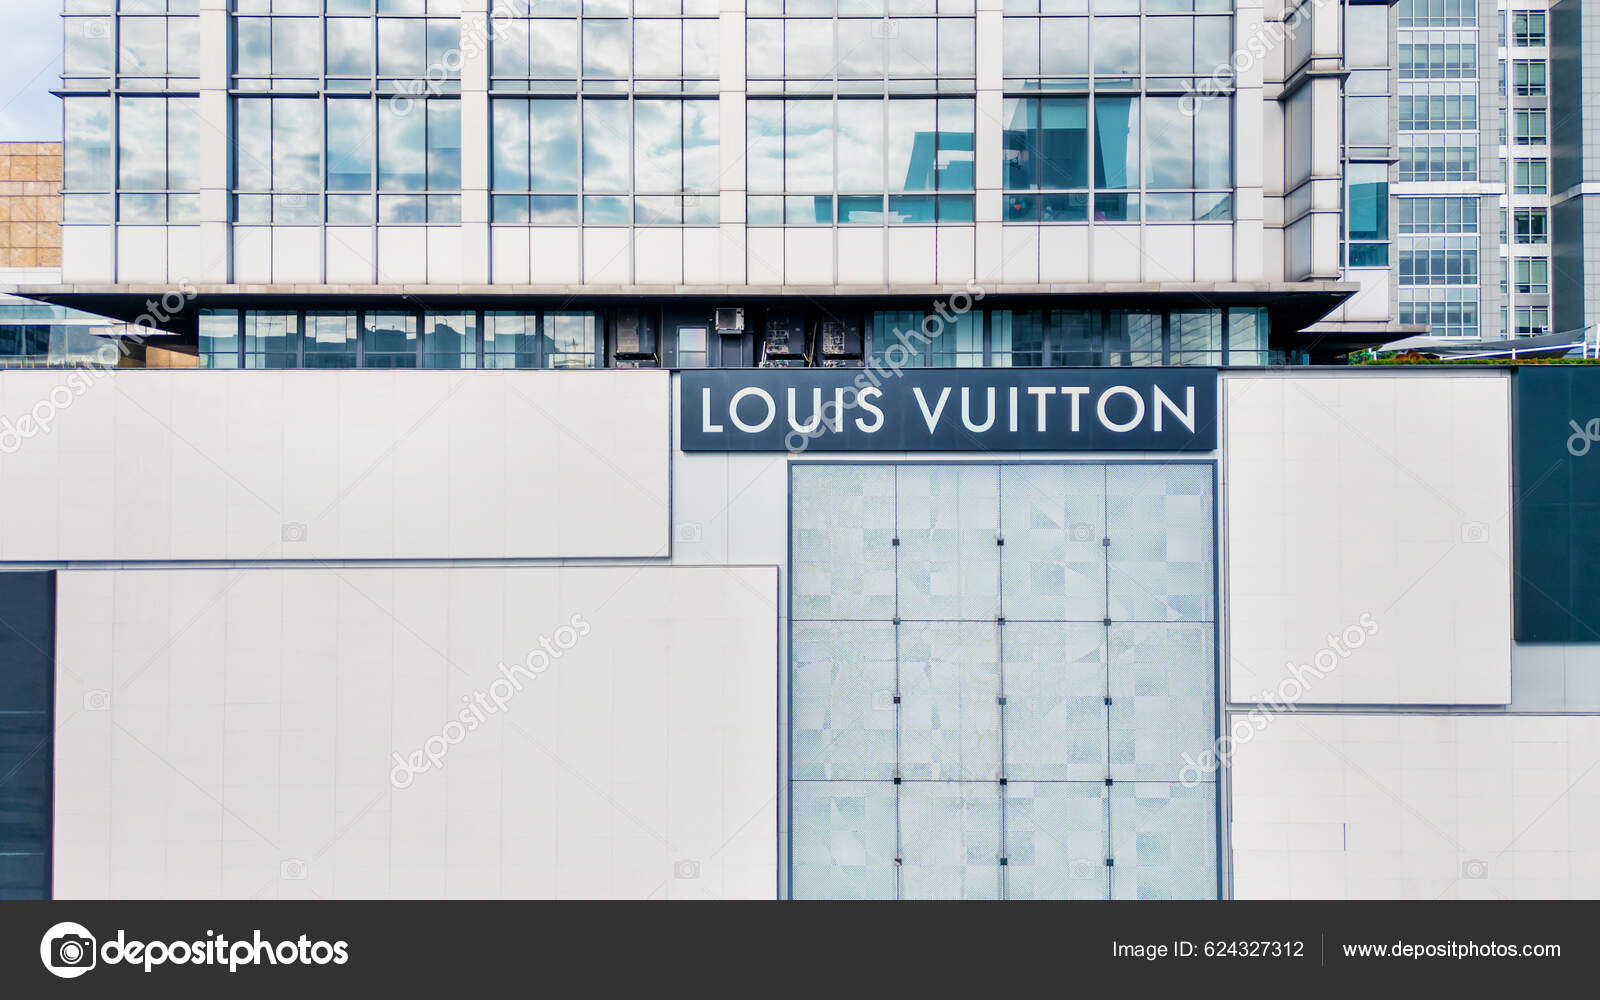 Louis Vuitton Jakarta Plaza Indonesia store, Indonesia